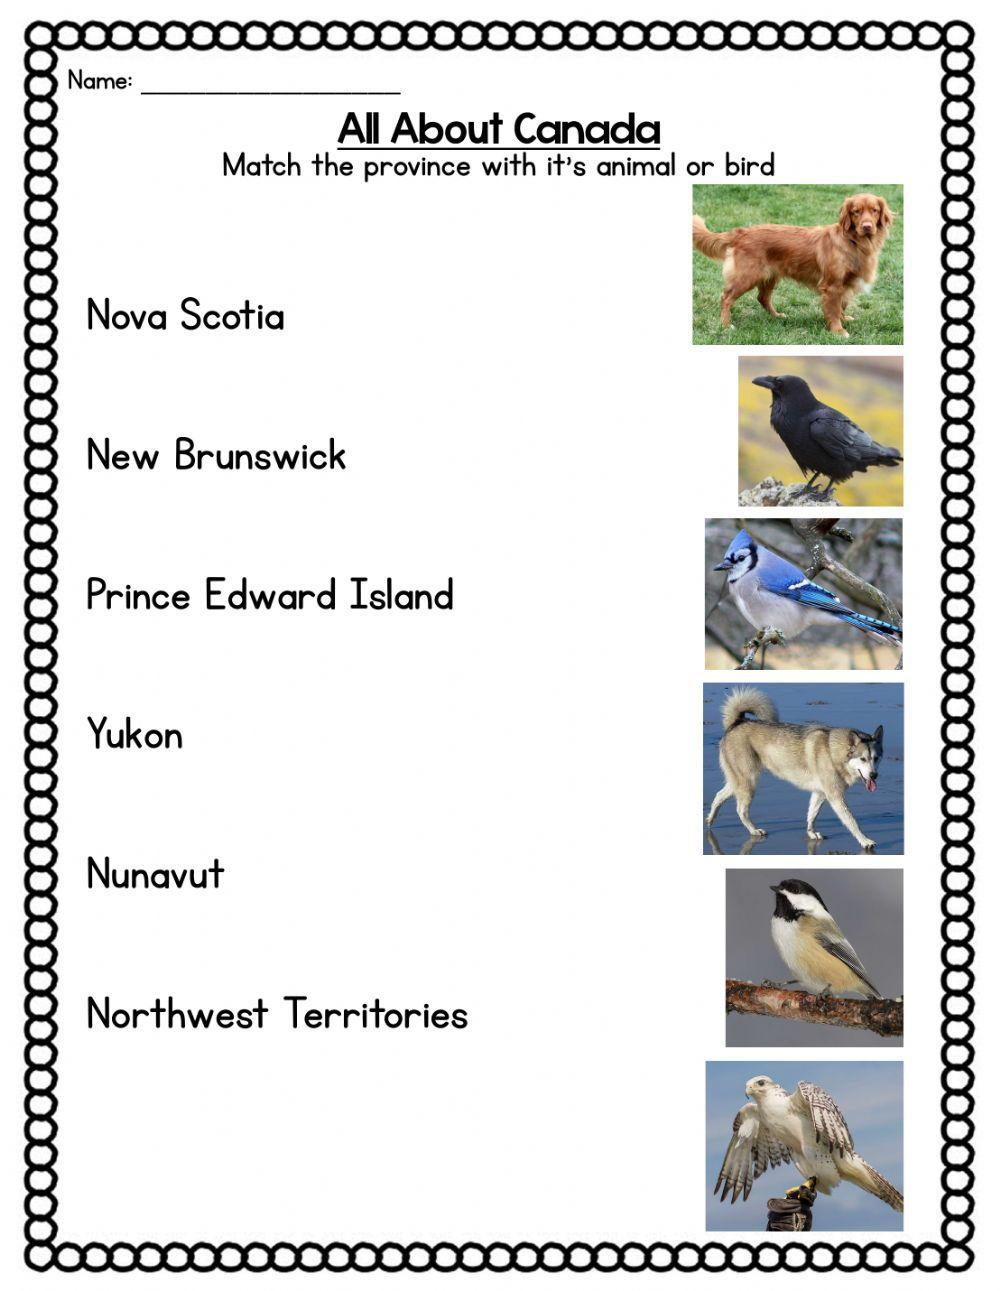 Provinces & Animals 2